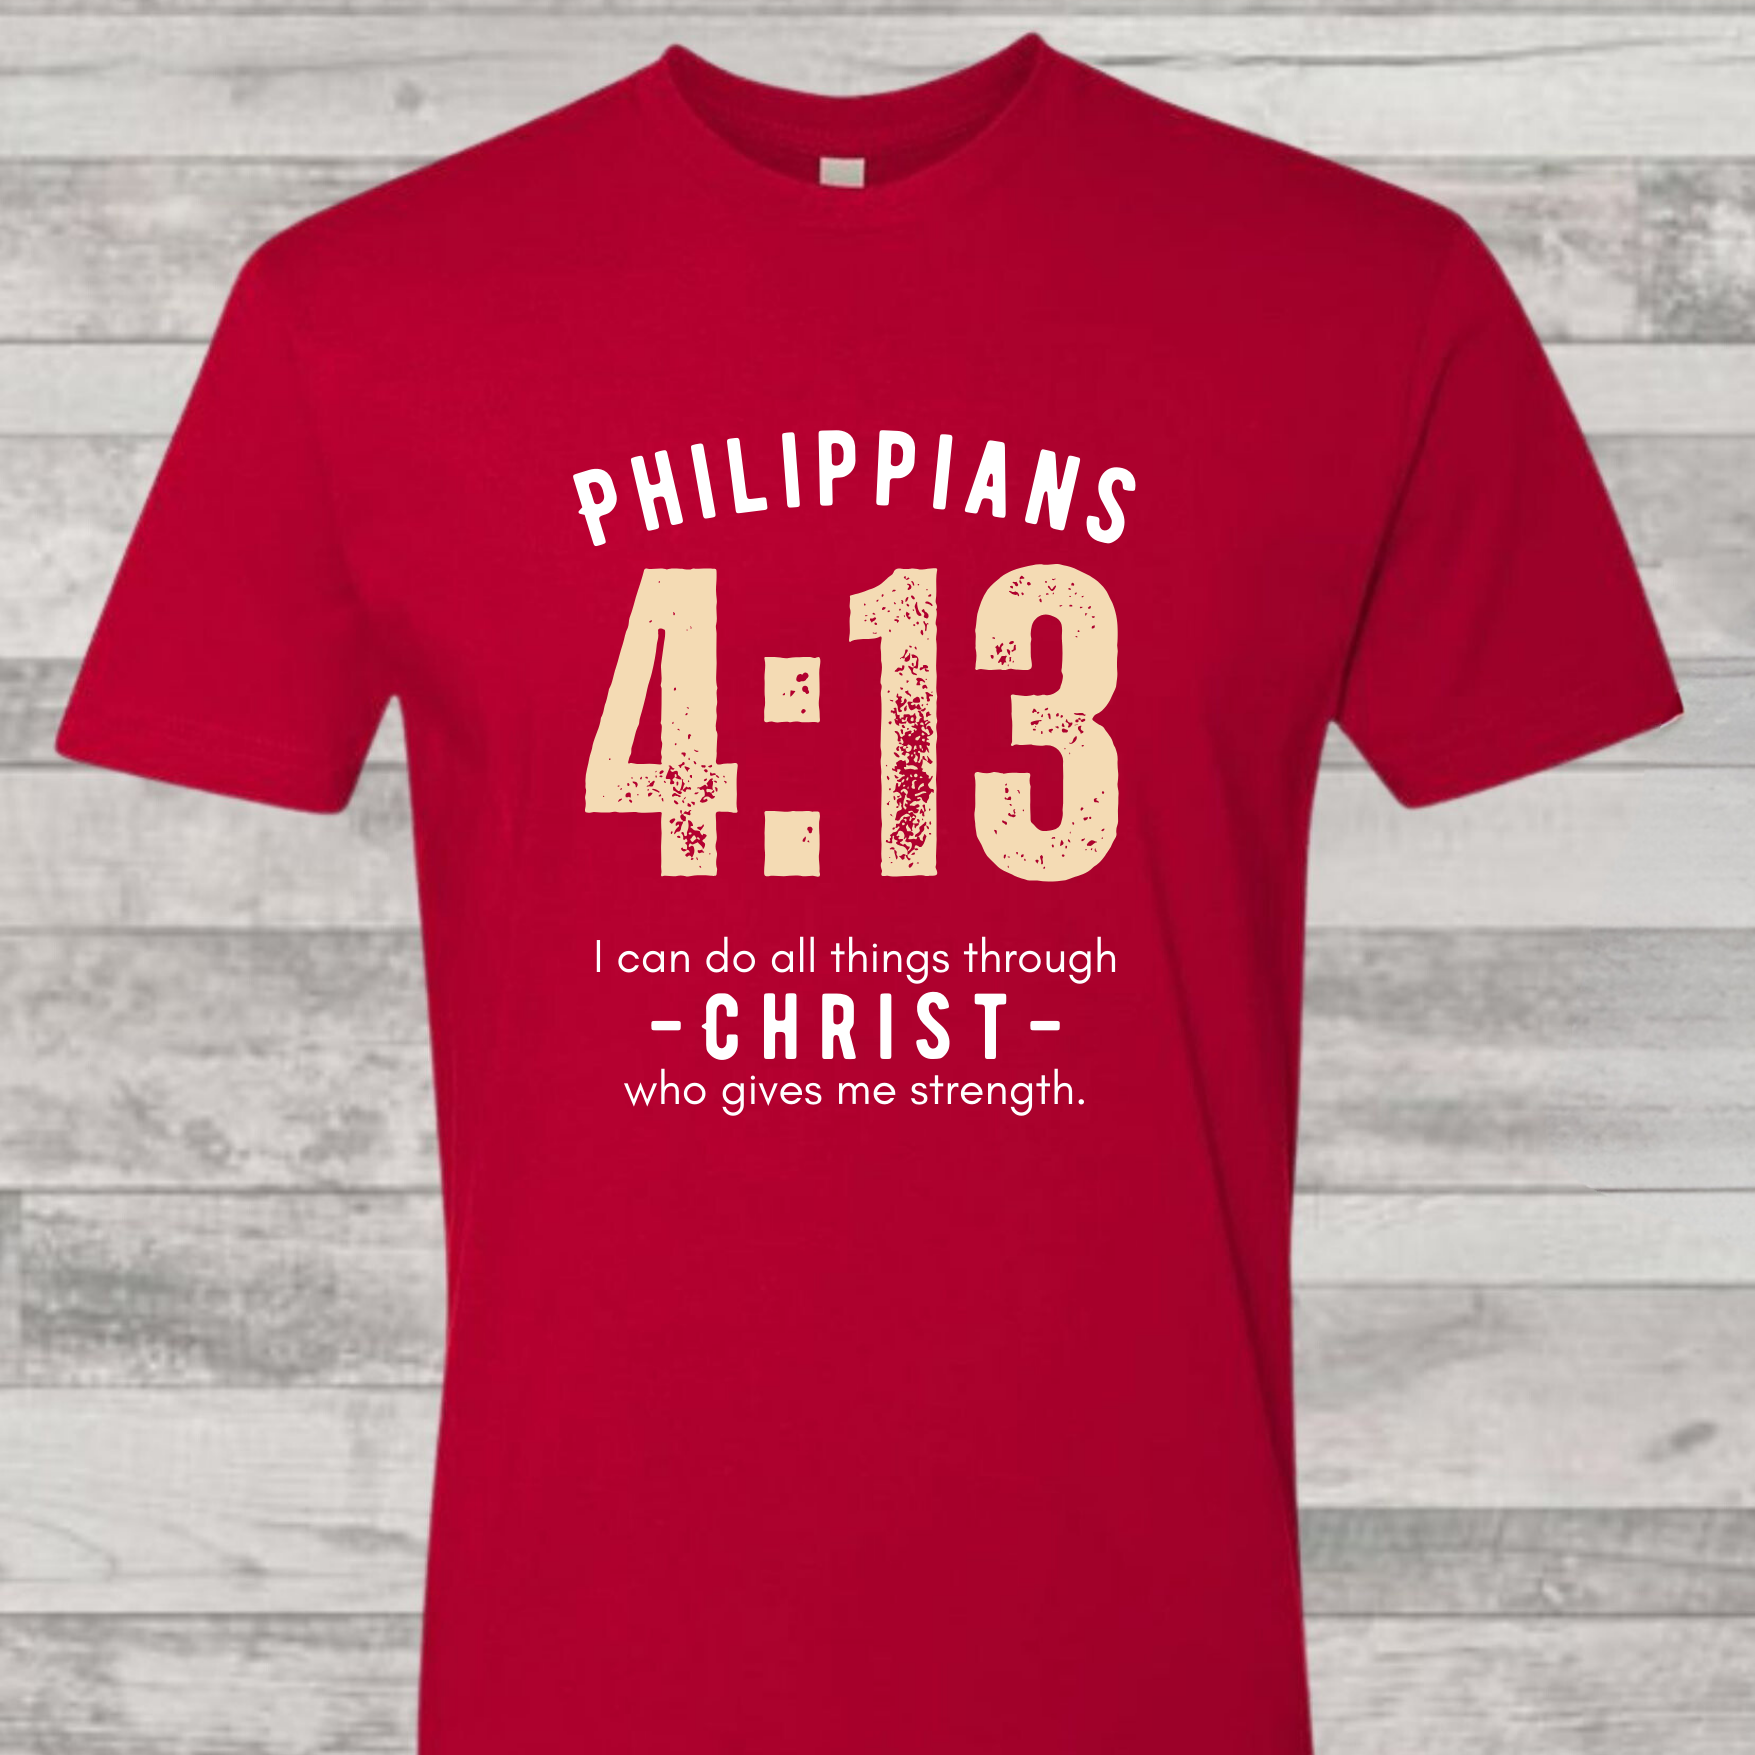 Philippians 4:13, Christian T-shirt for Men, Cotton Crew, red